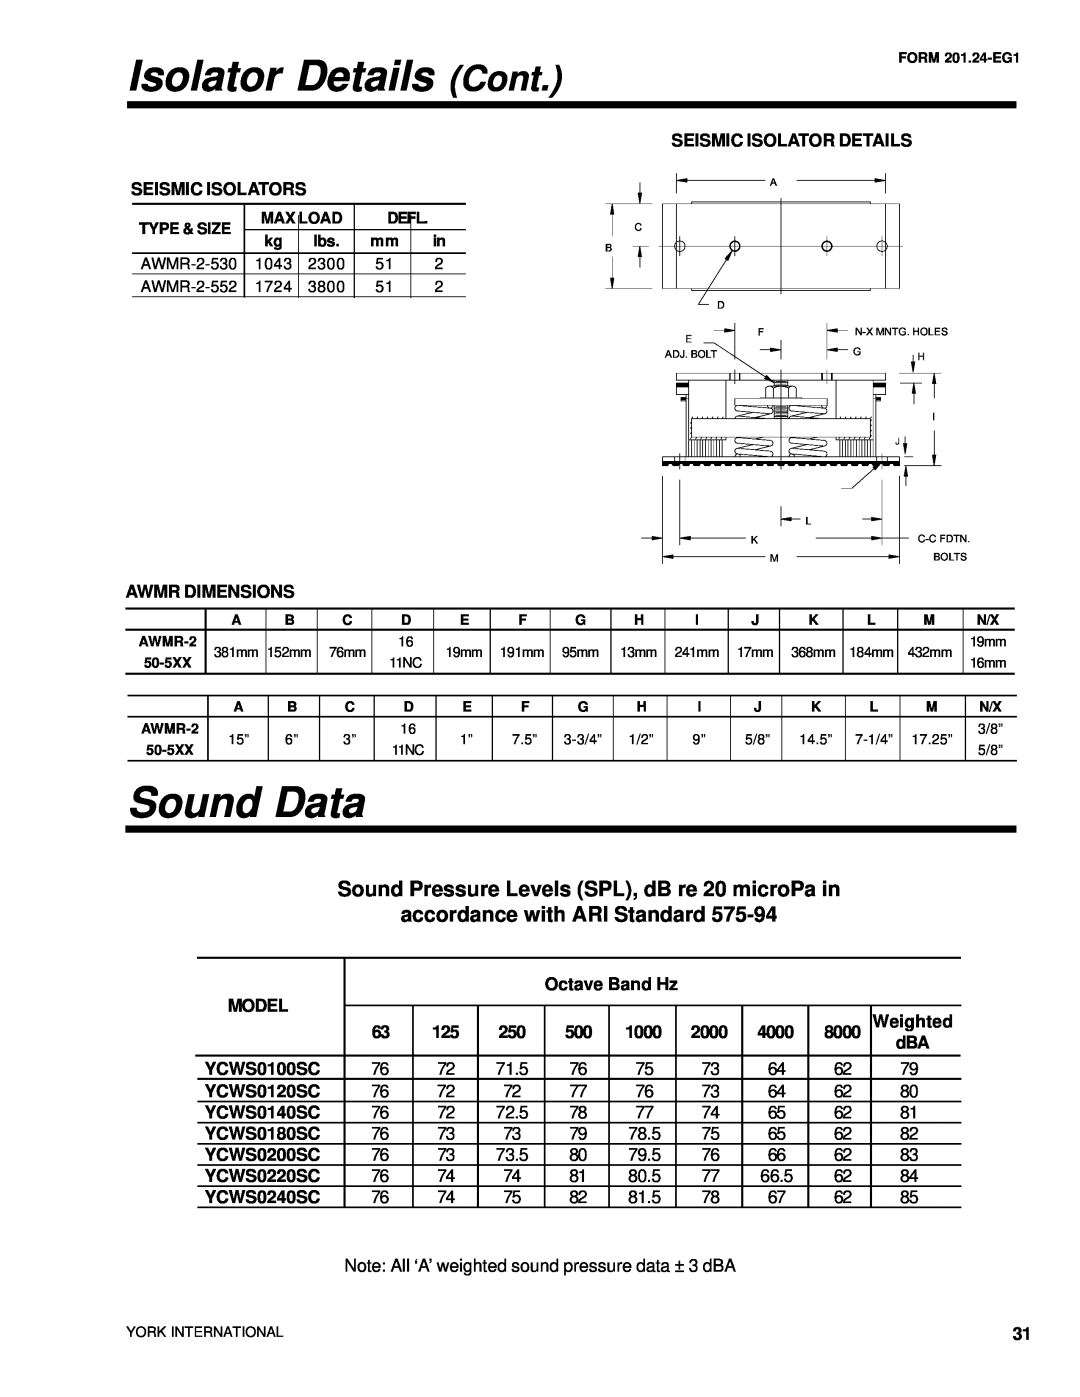 York YCWS Isolator Details Cont, Sound Data, Sound Pressure Levels SPL, dB re 20 microPa in, accordance with ARI Standard 